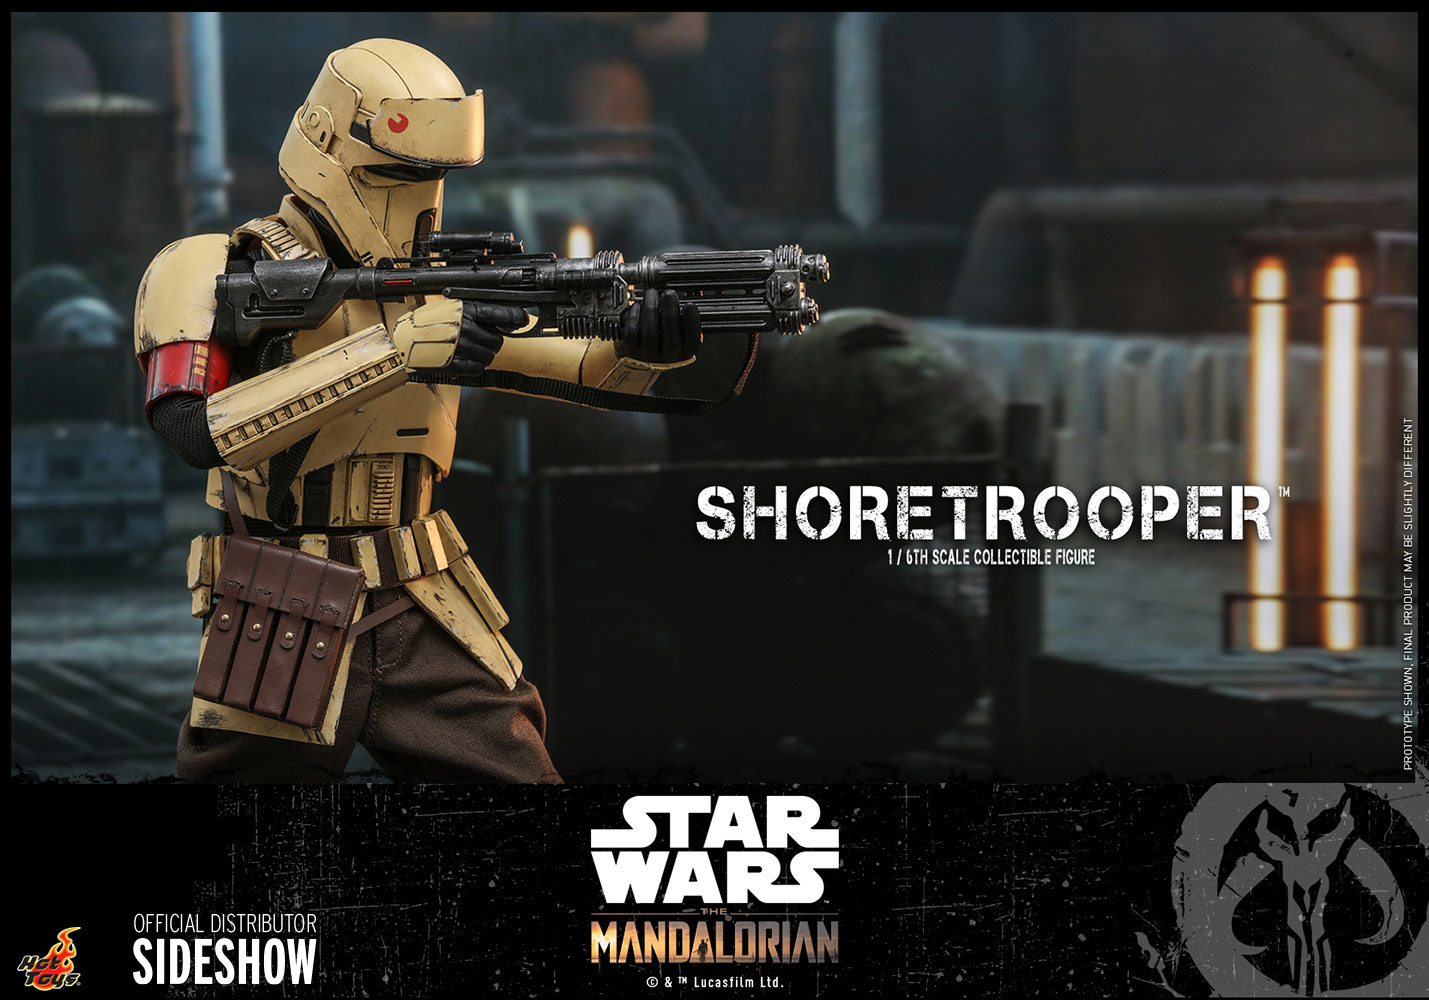 Star Wars: The Mandalorian - Shoretrooper